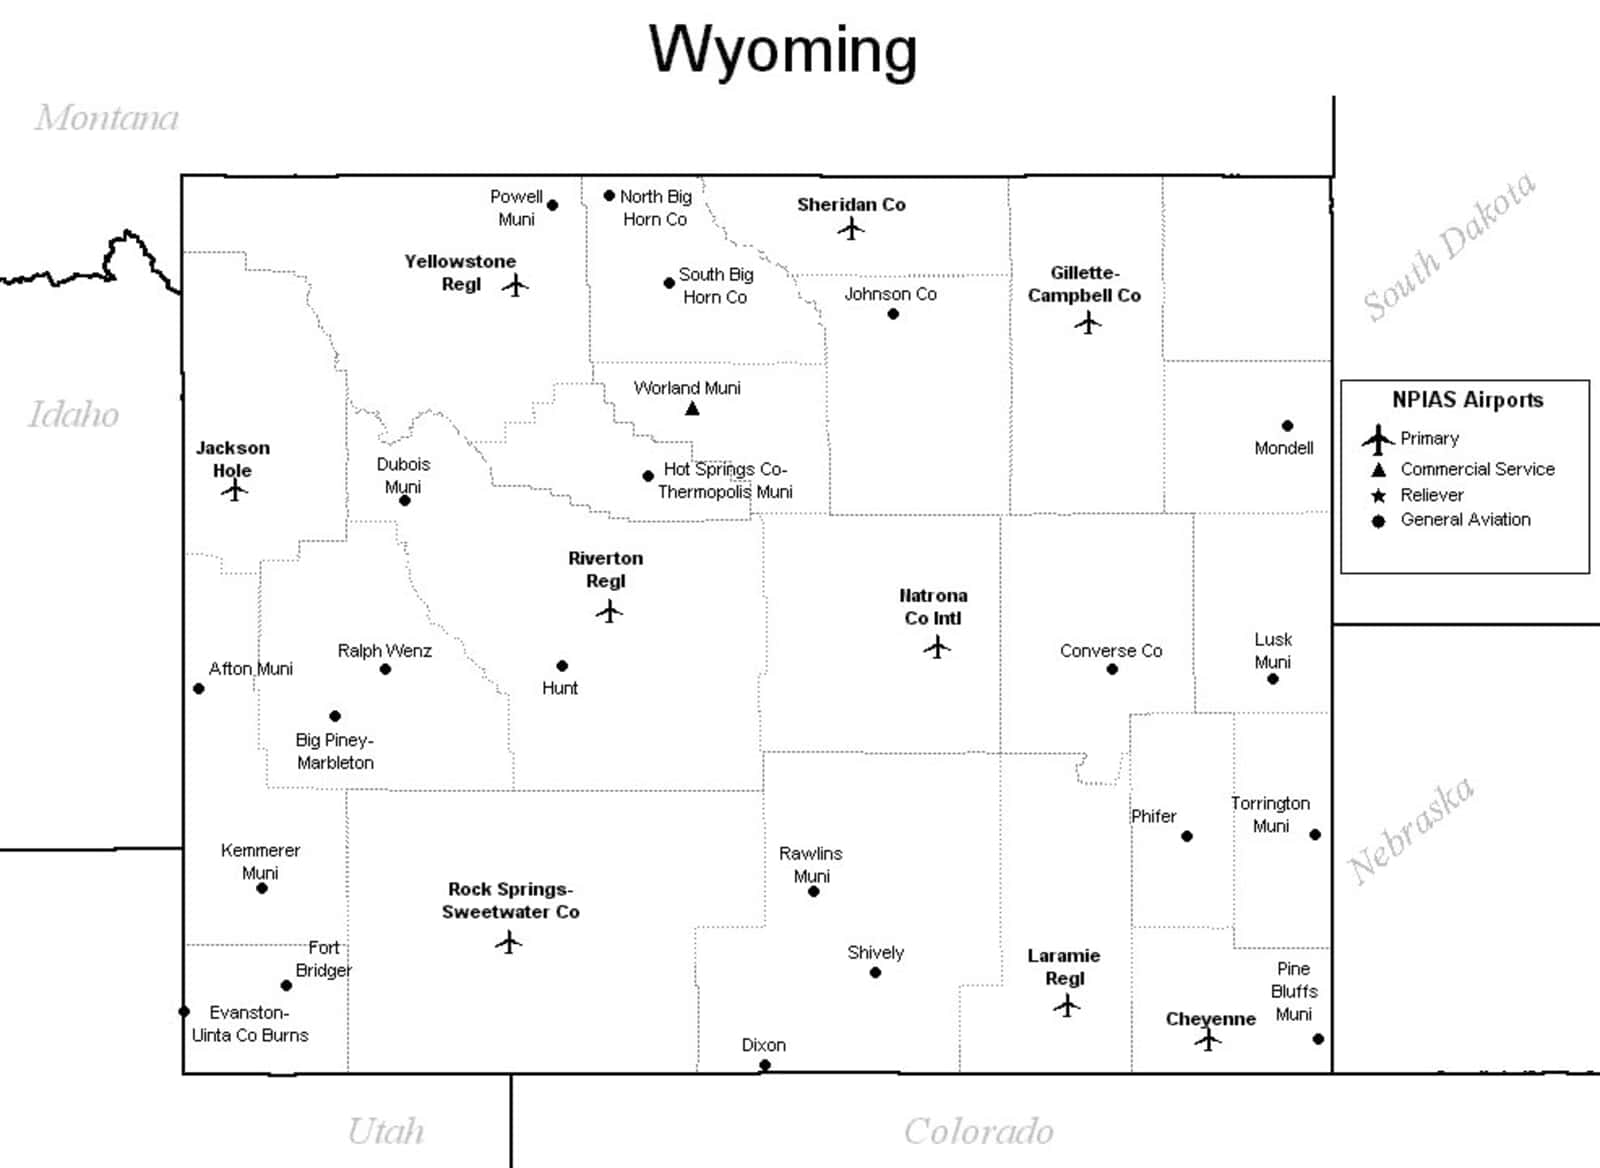 Wyoming Airport Map Wyoming Airports